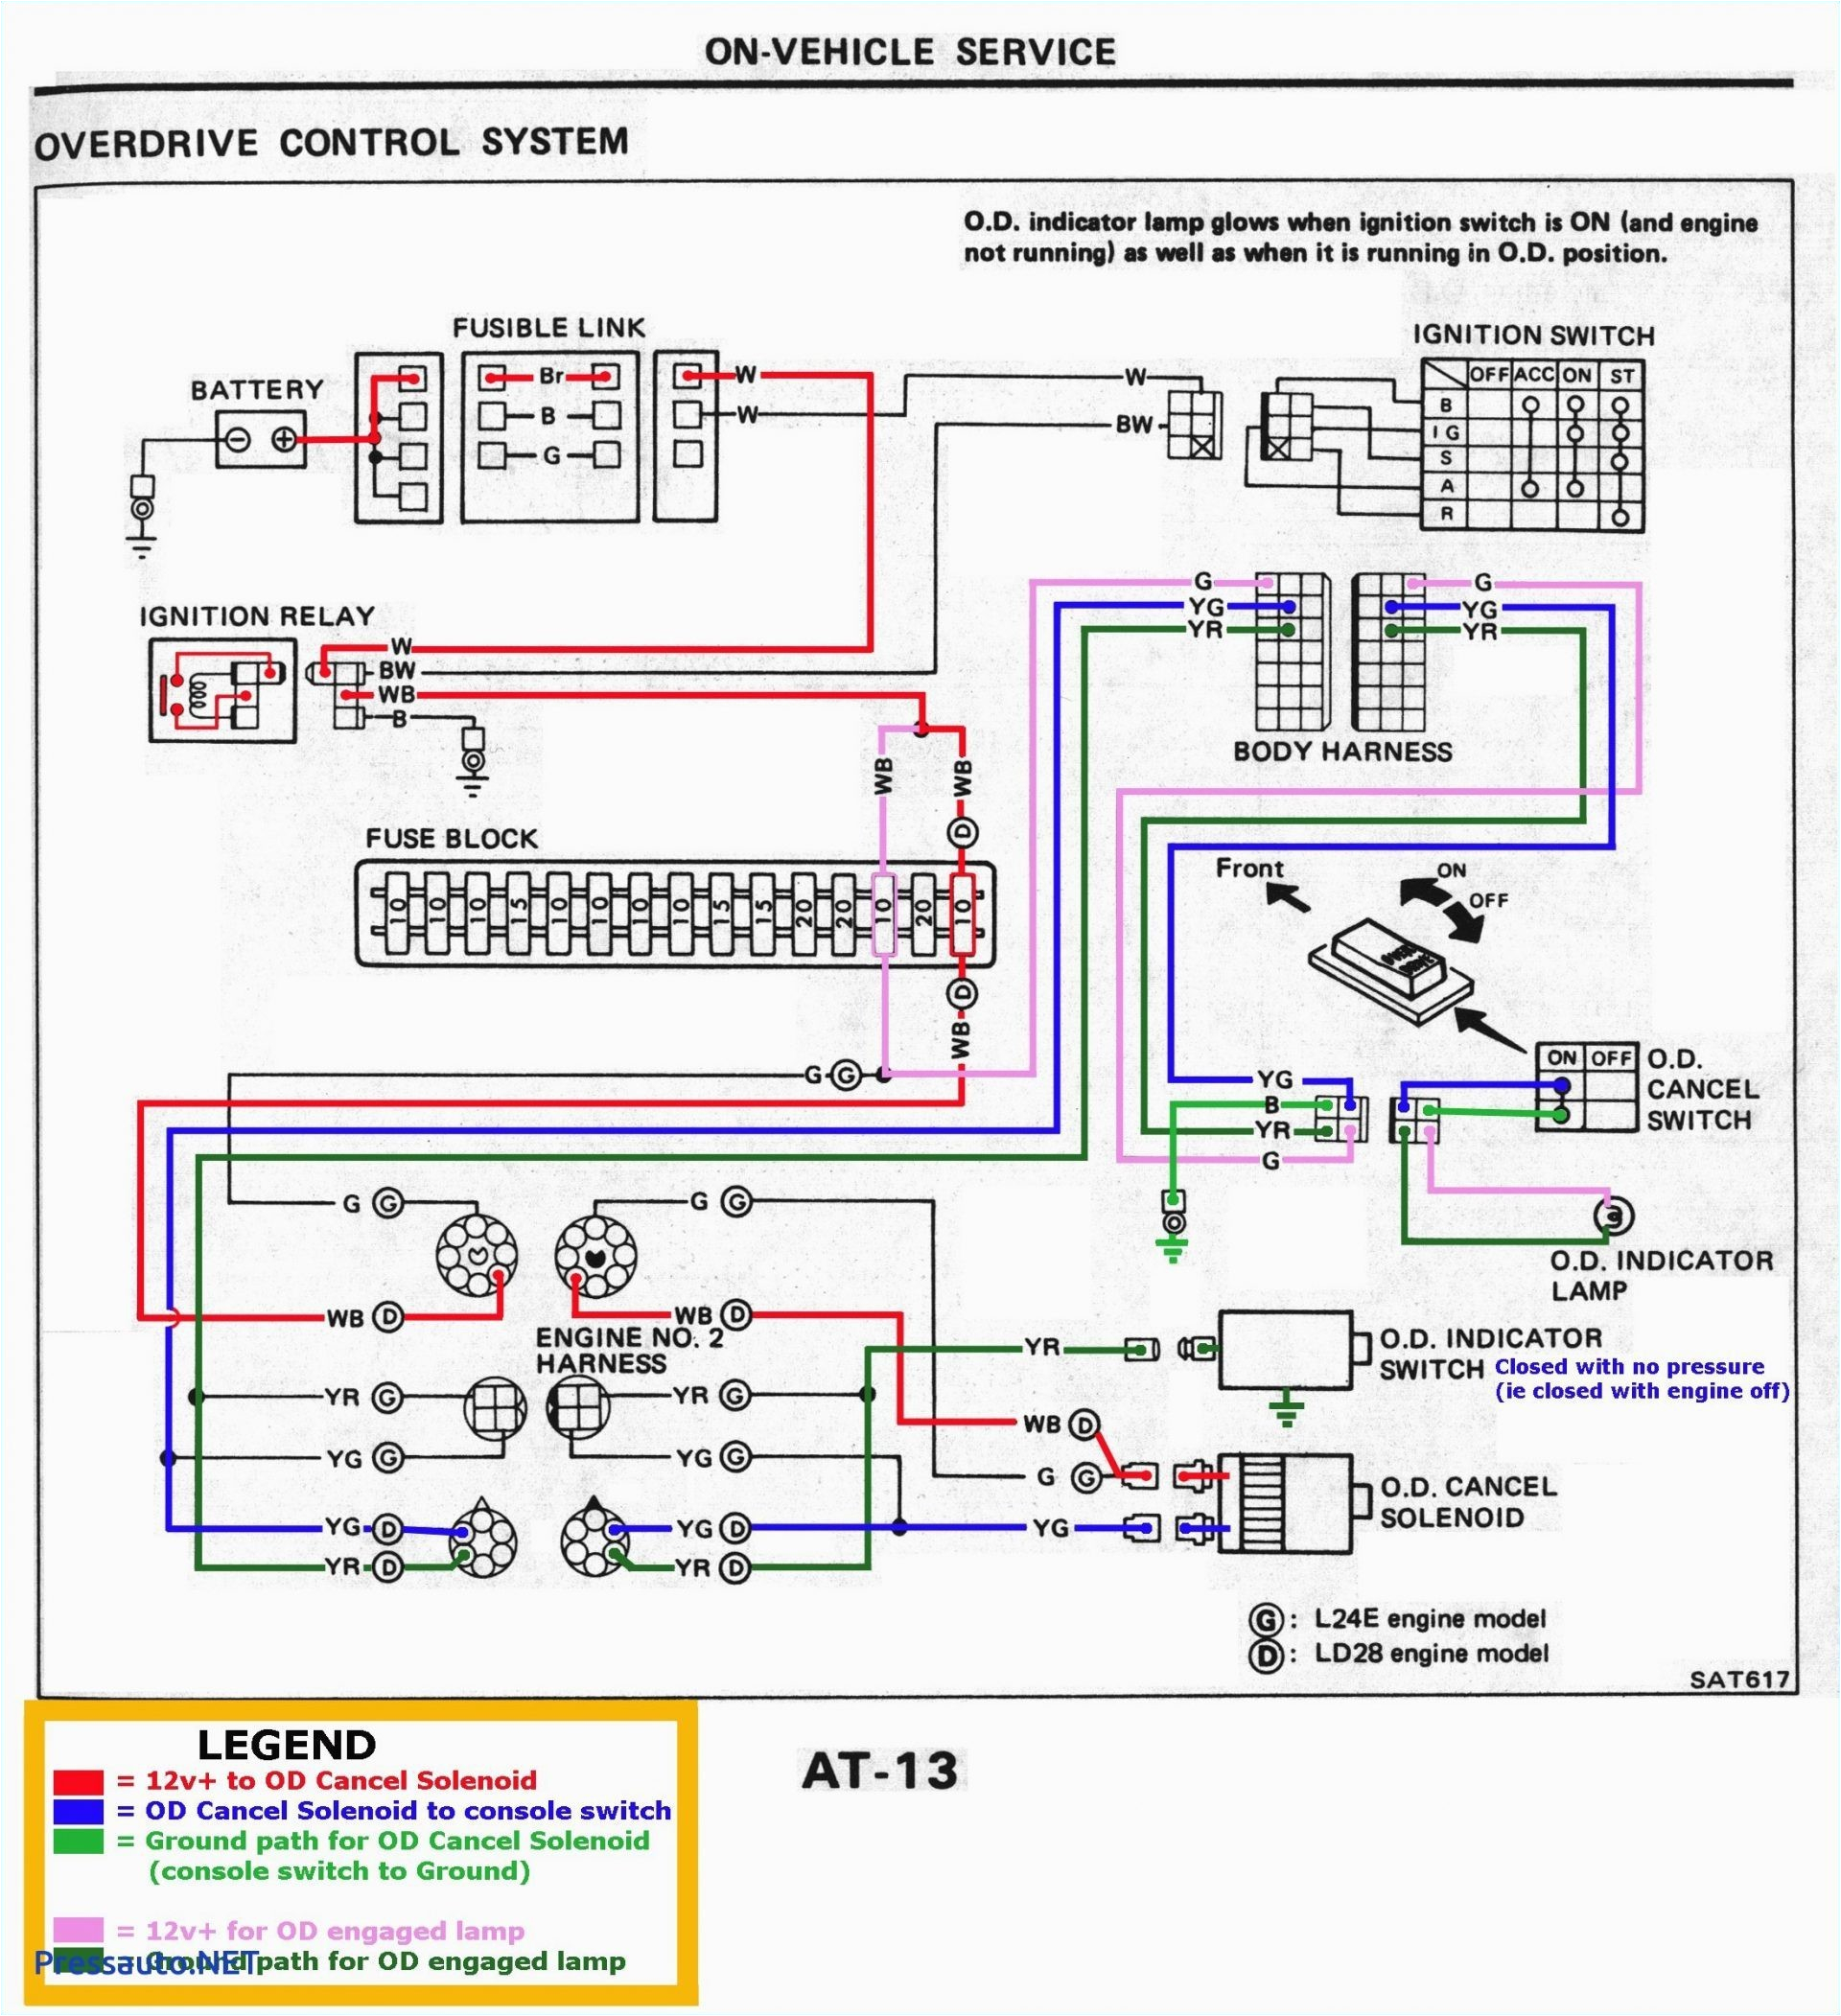 clarion m5475 wiring diagram rc wiring diagram database blog clarion m5475 wiring diagram rc